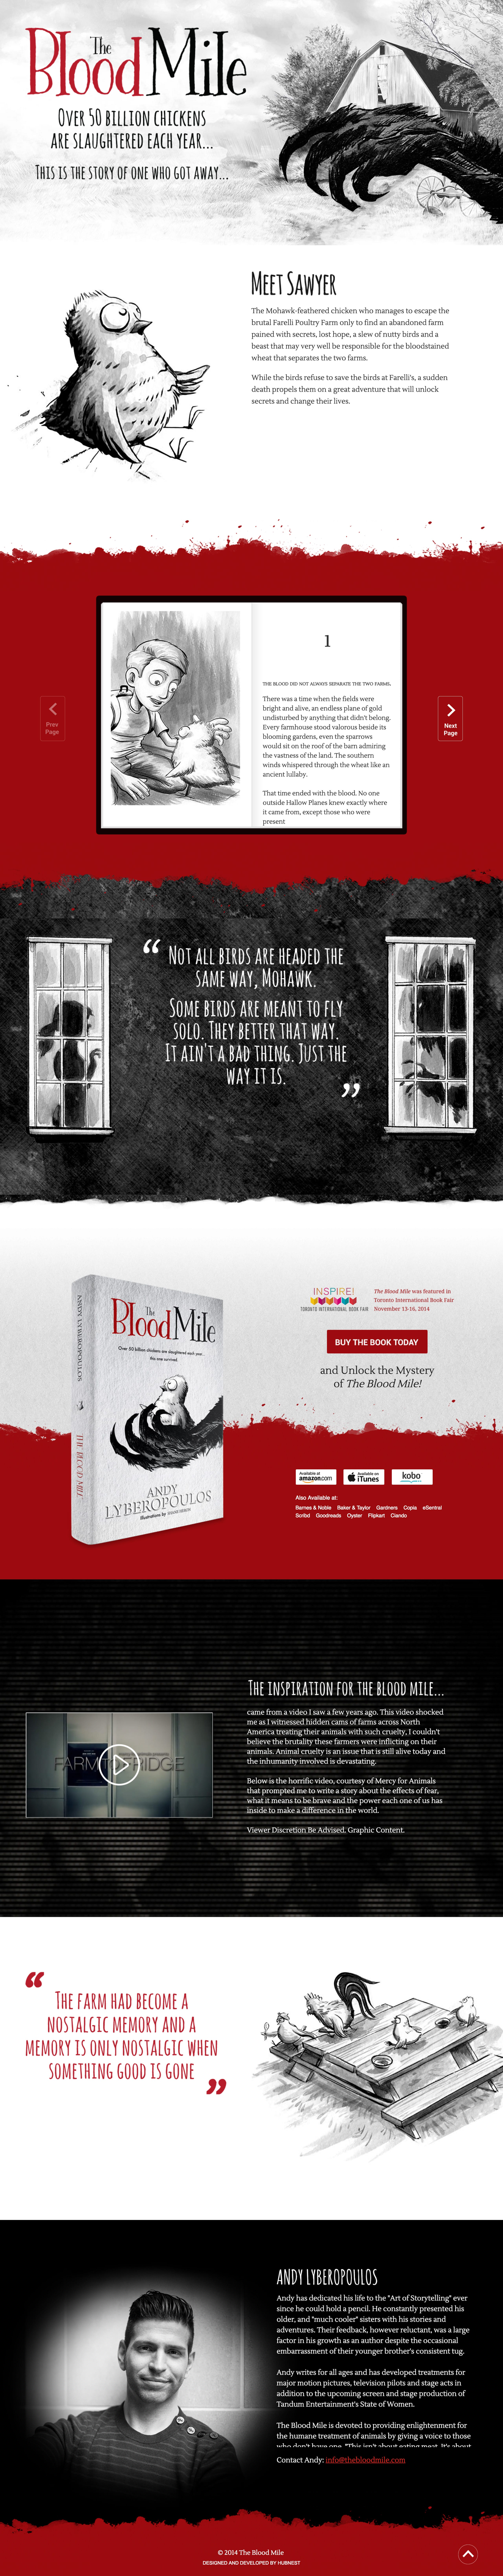 The Blood Mile Website Screenshot